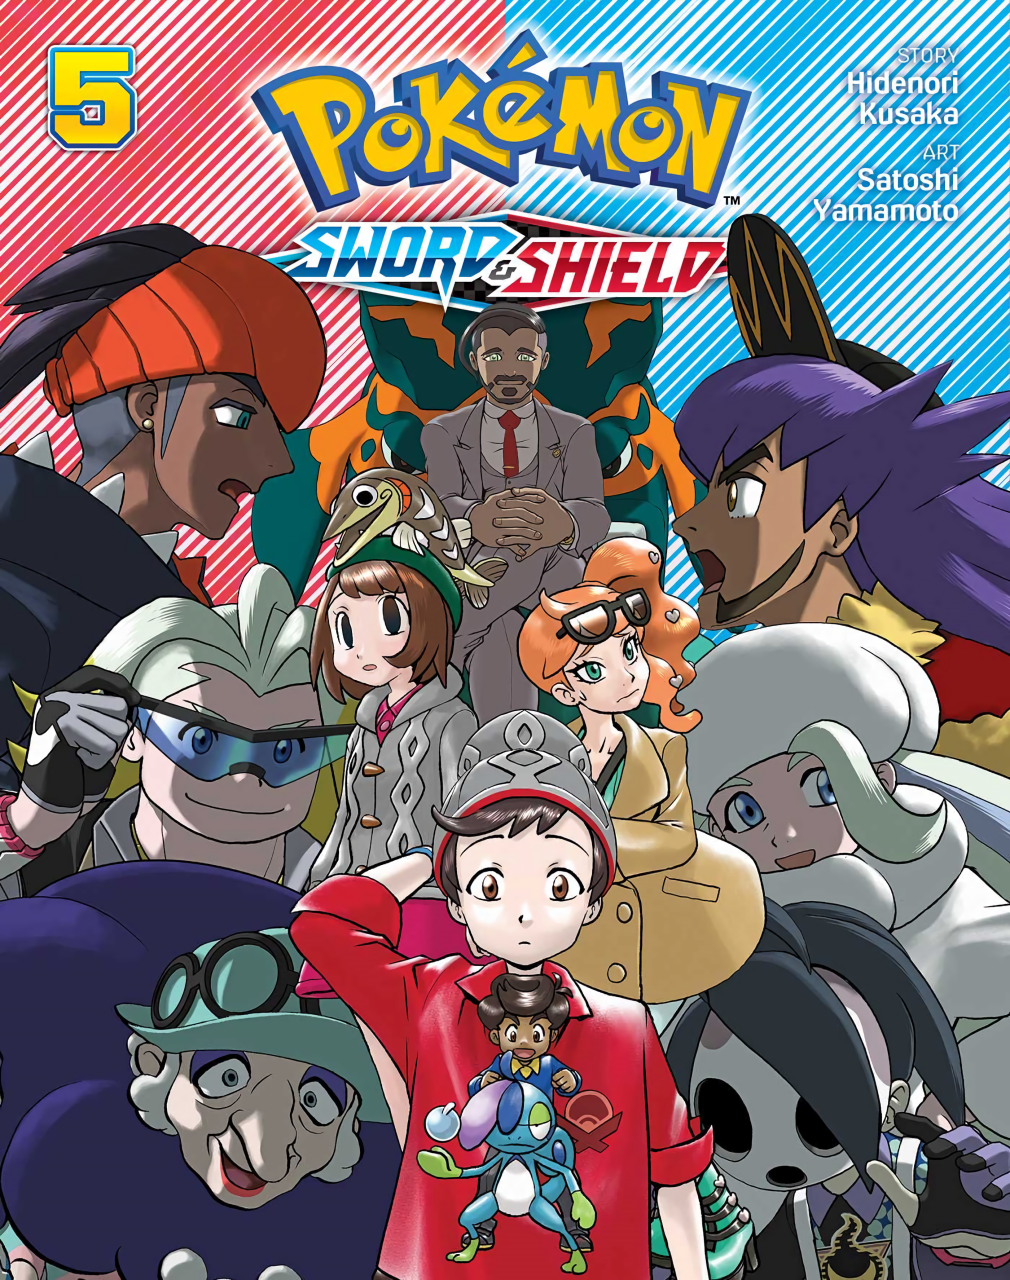 Pokémon Sword And Shield Volume 5 Bulbapedia The Community Driven Pokémon Encyclopedia 